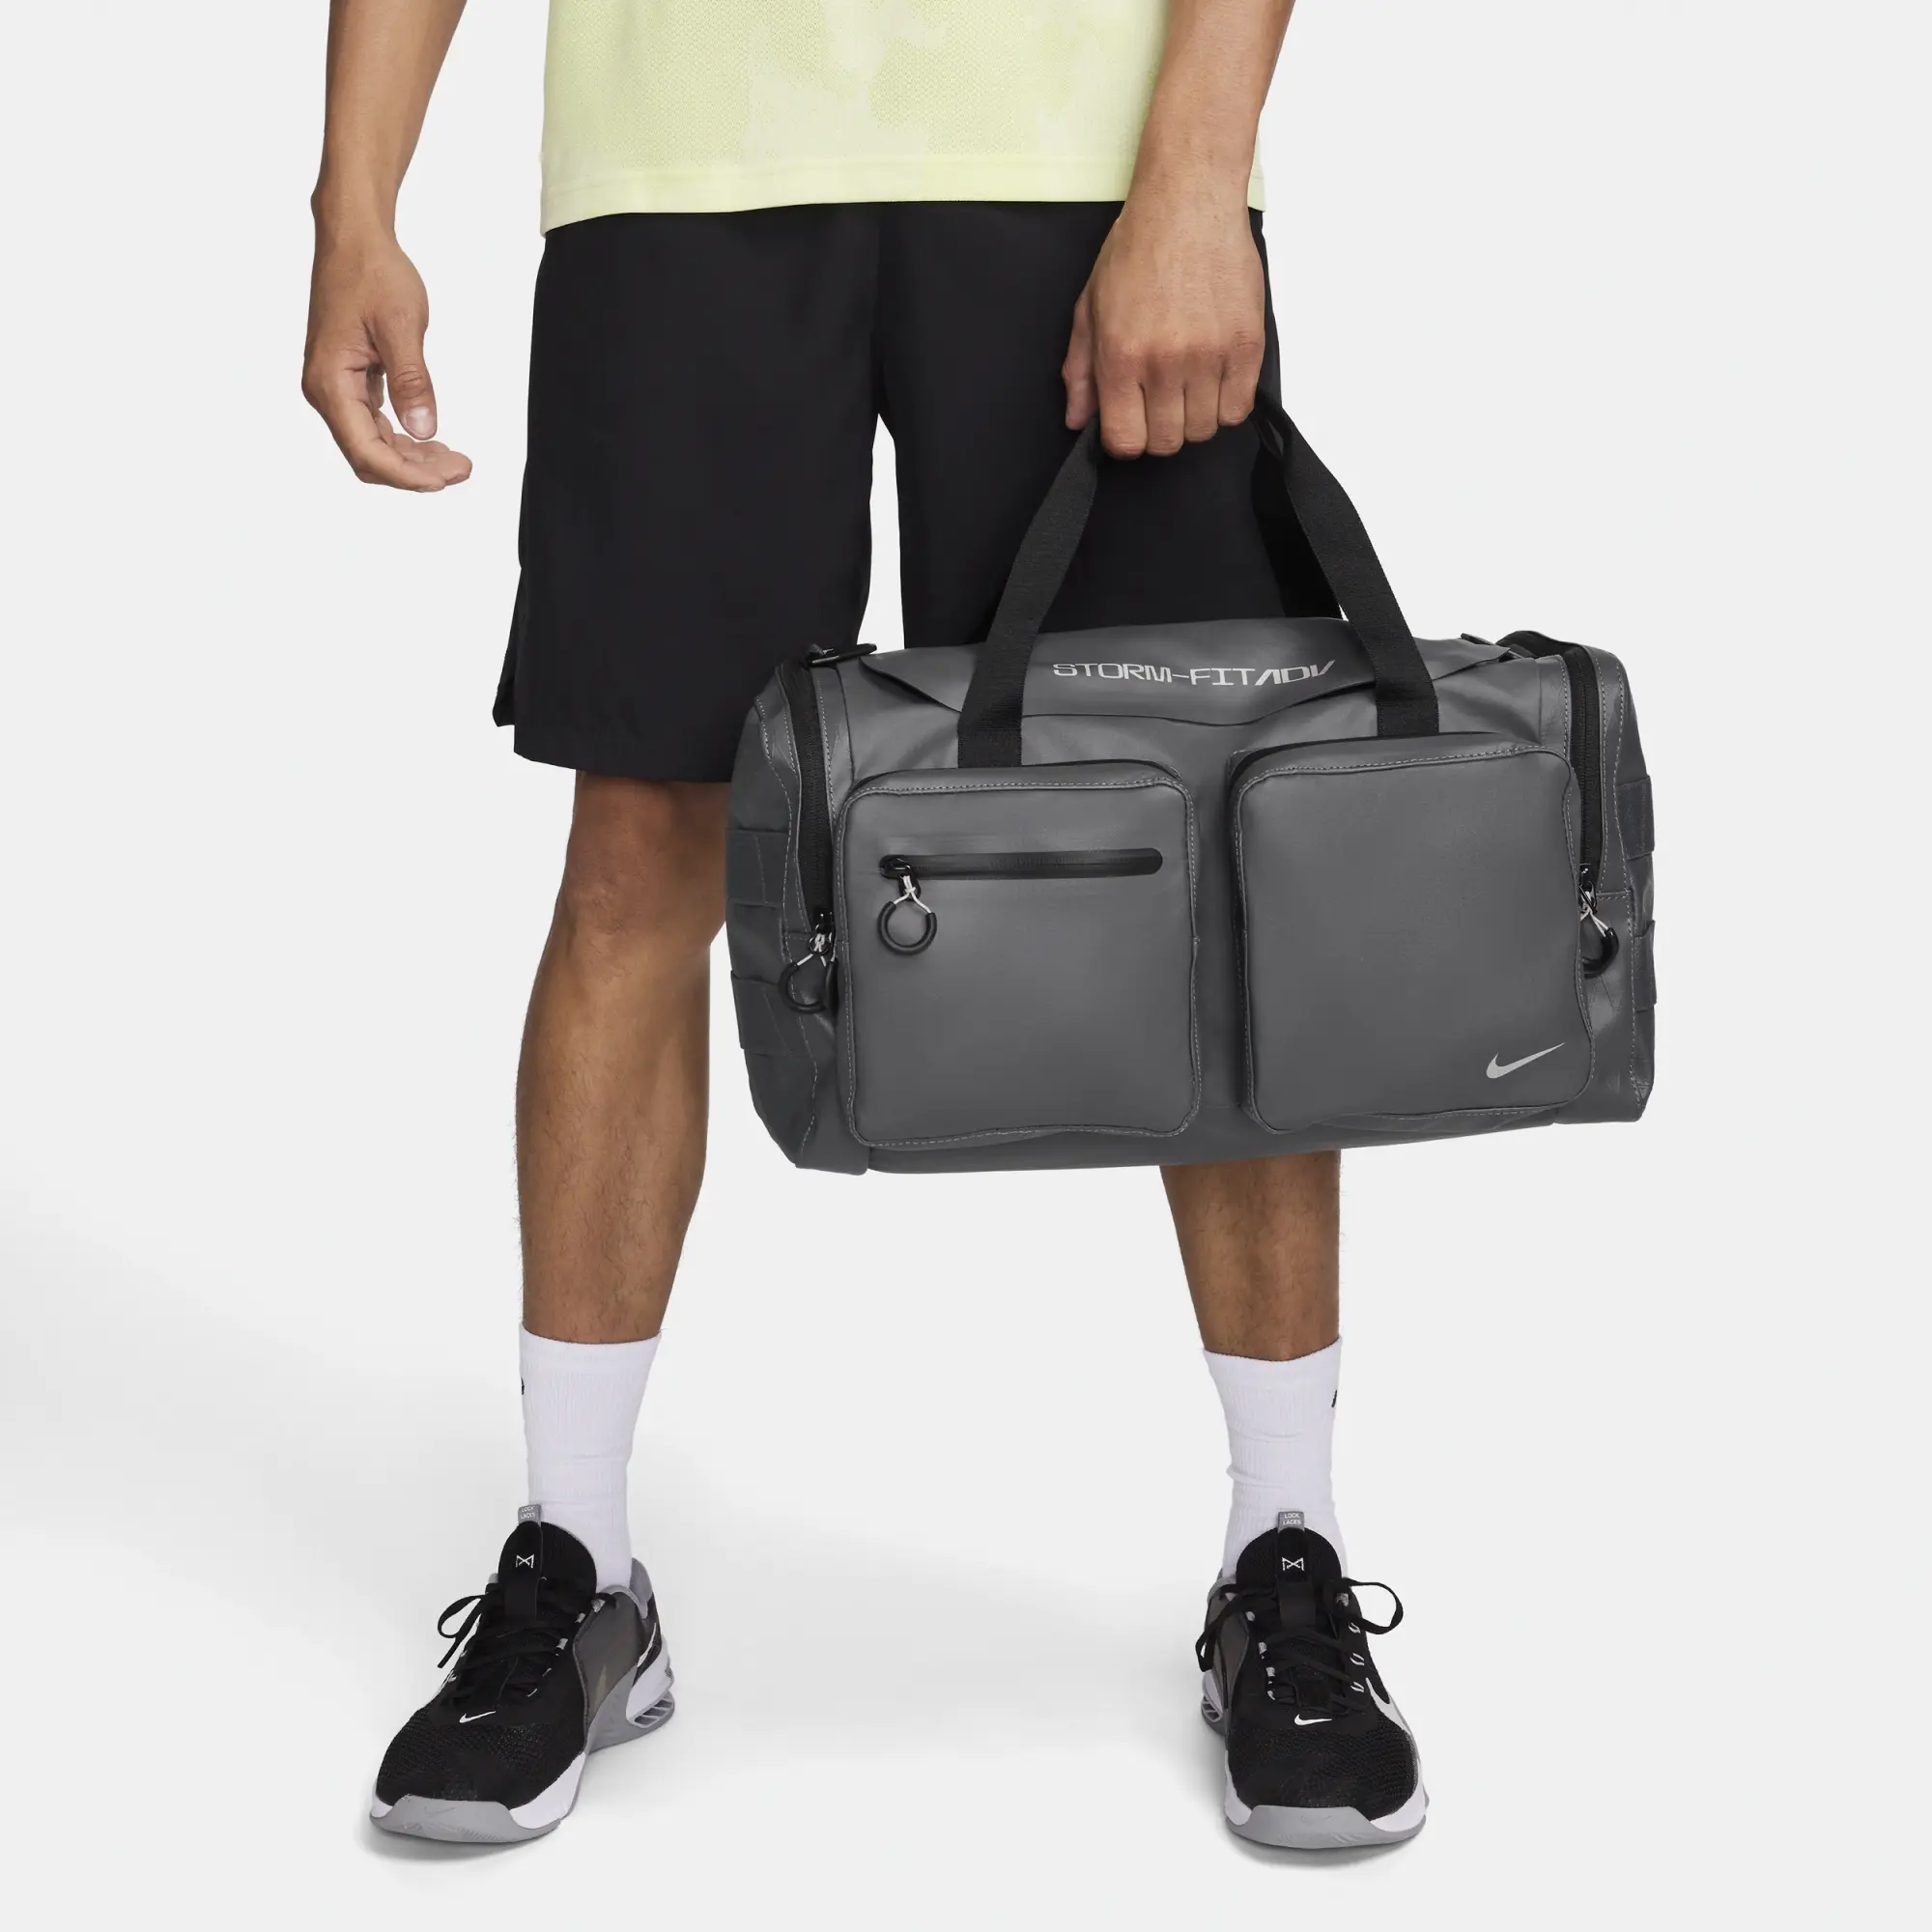 Nike Storm-FIT ADV Utility Power Duffel Bag (Small, 31L) - Grey